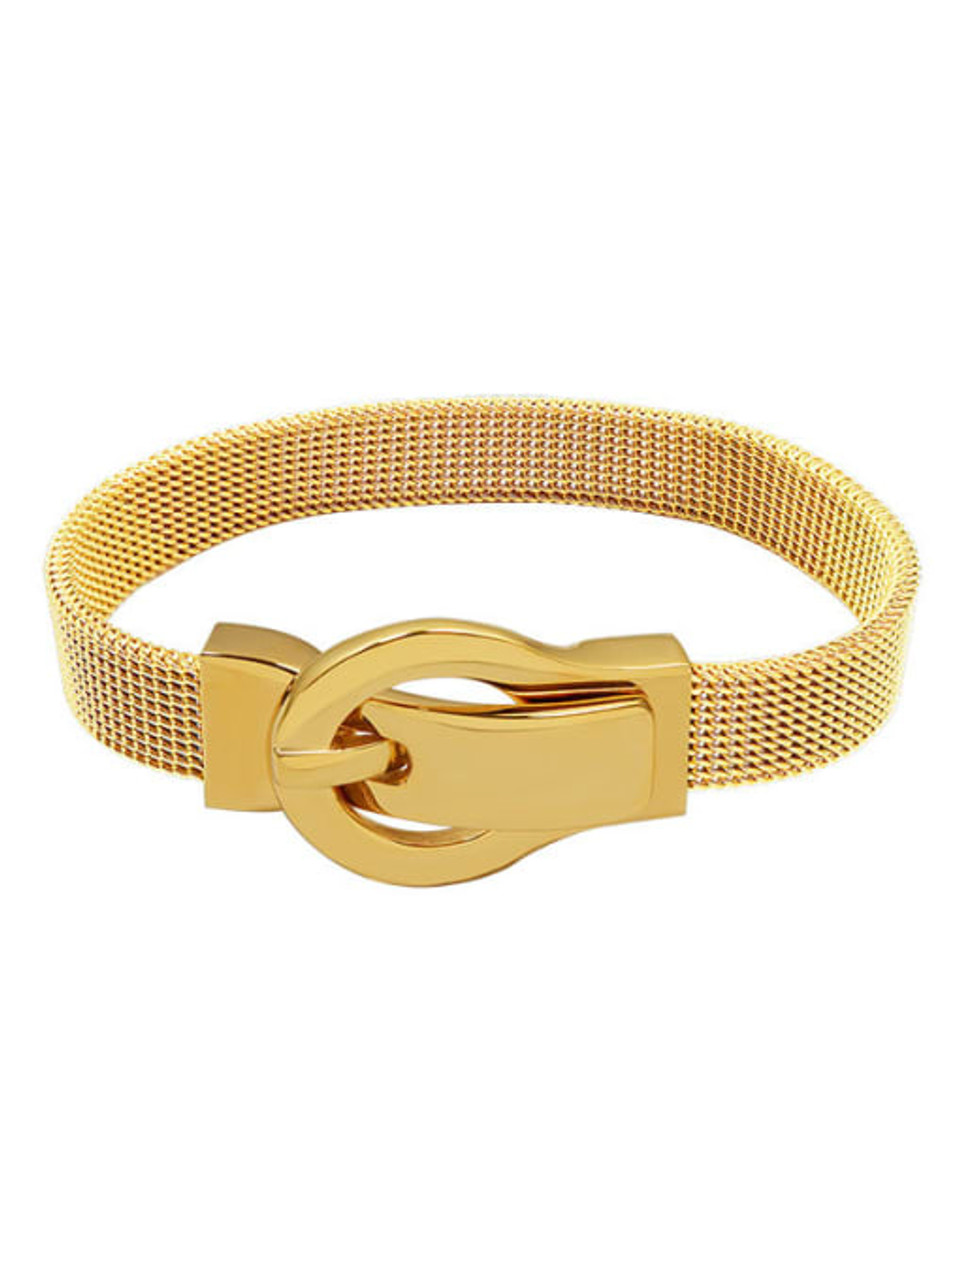 Buy Stylish Silver Antique Oxidised Bracelet Kada for Women Accessories  Jewellery Adjustable Bangle Bracelet [Pack of 1] Bracelet Stylish Latest at  Amazon.in